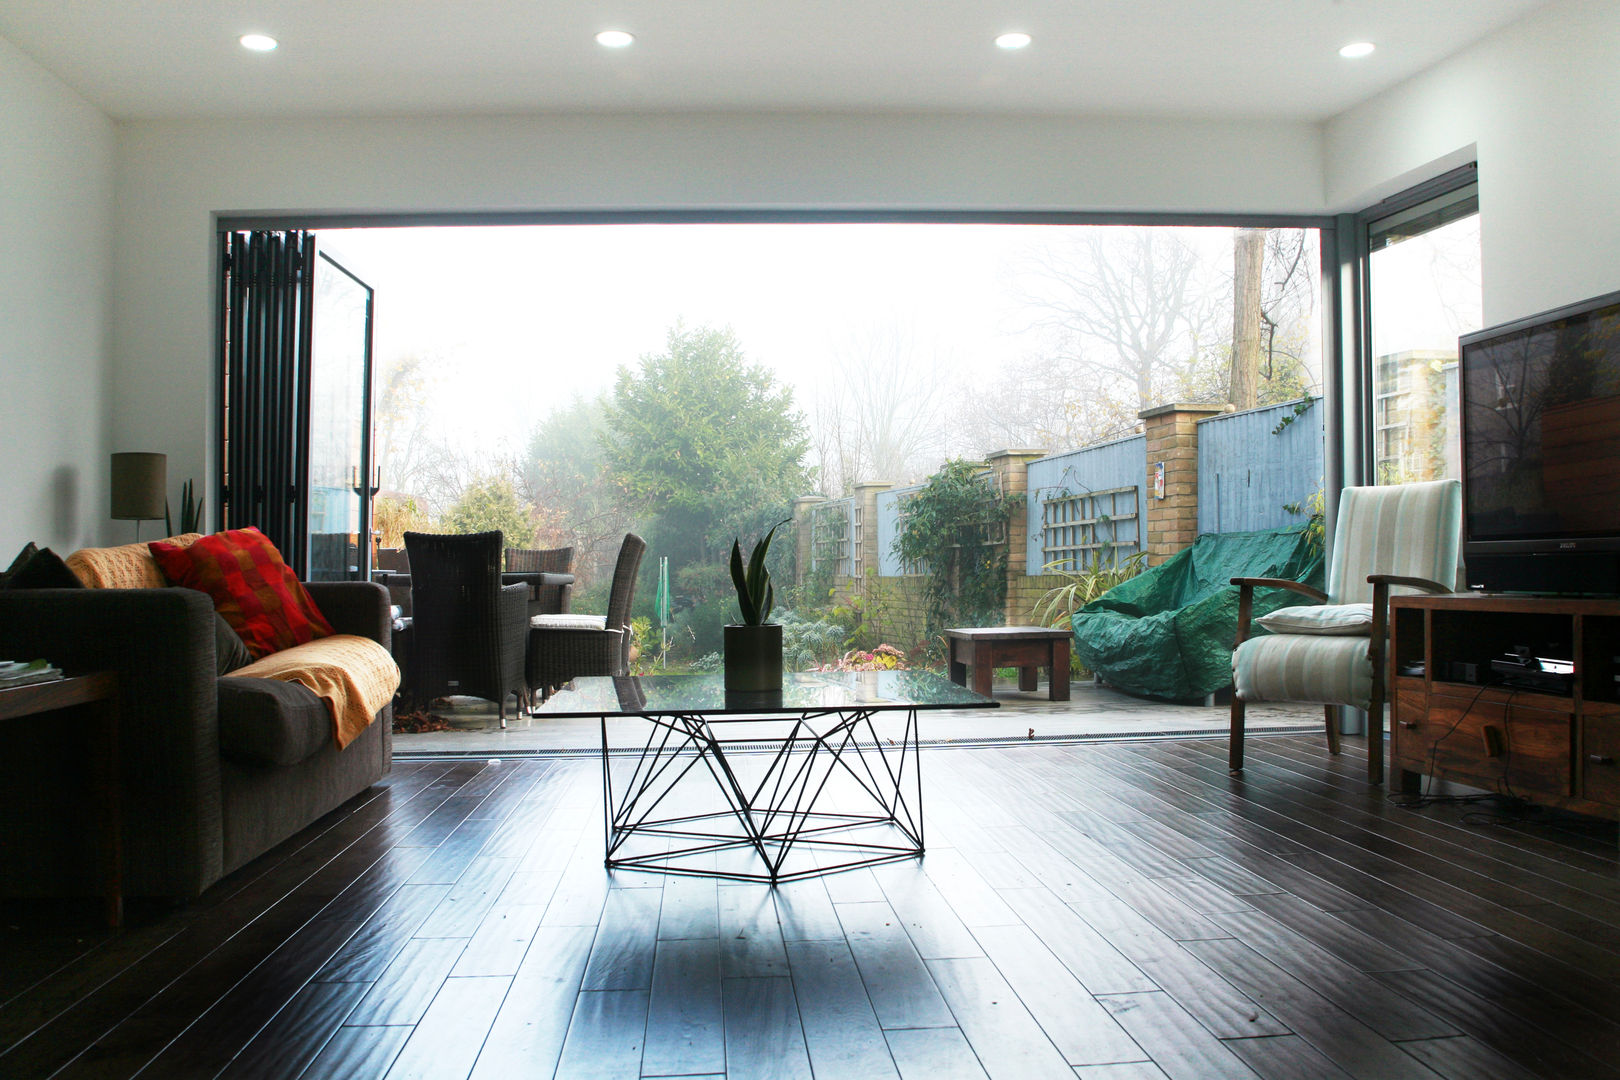 Brockley, Lewisham SE4, London | House extension GOAStudio London residential architecture limited غرفة المعيشة